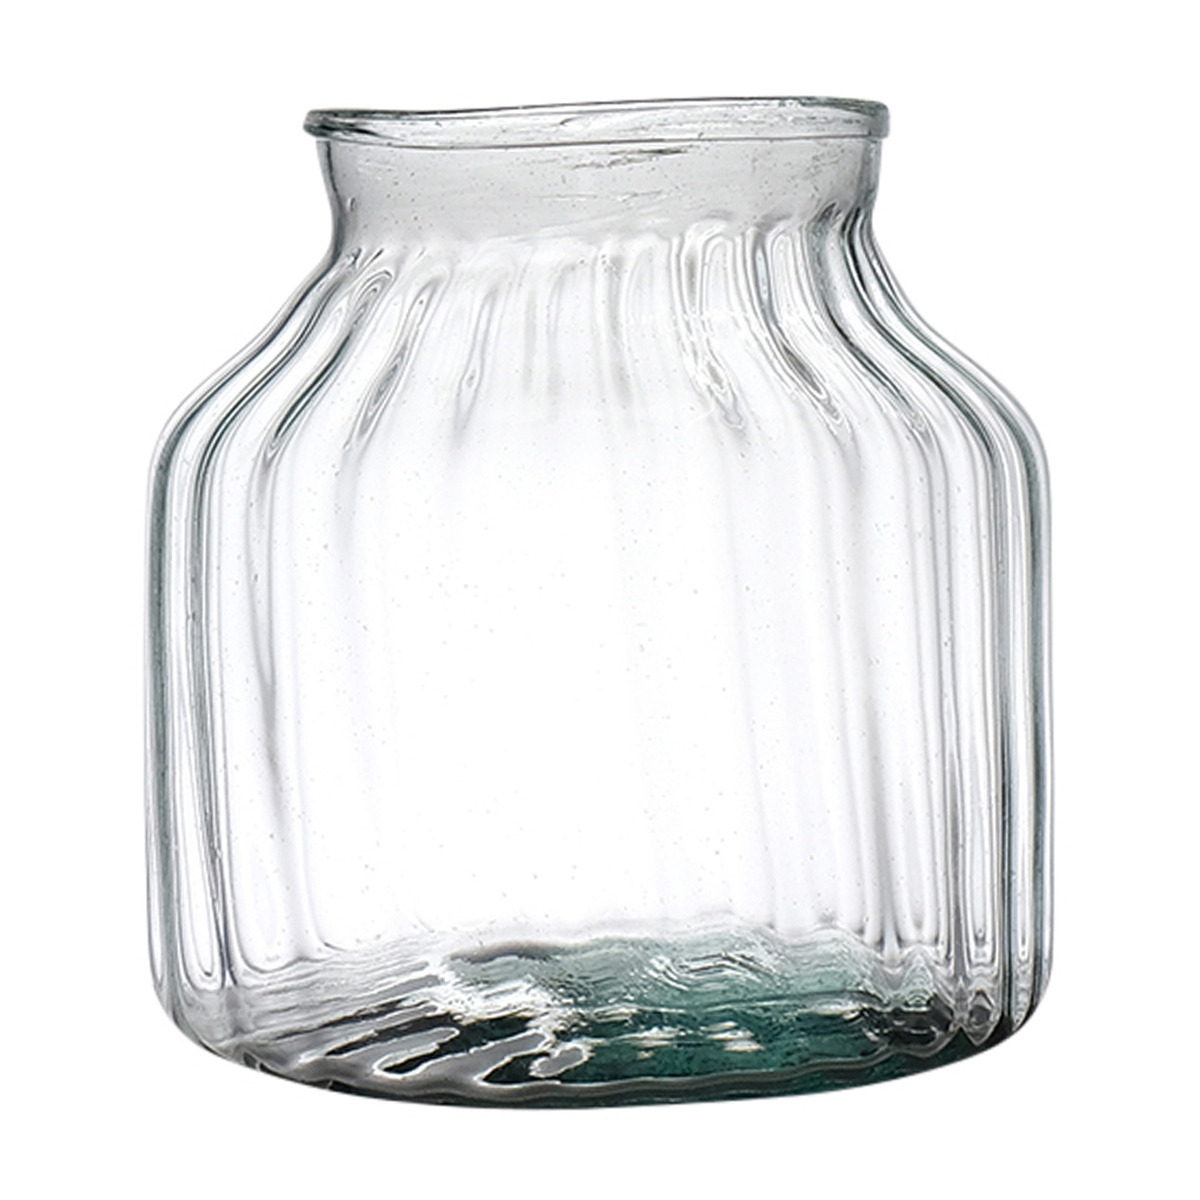 Hakbijl Glass Bloemenvaas Organic transparant eco glas D21 x H20 cm Melkbus vaas